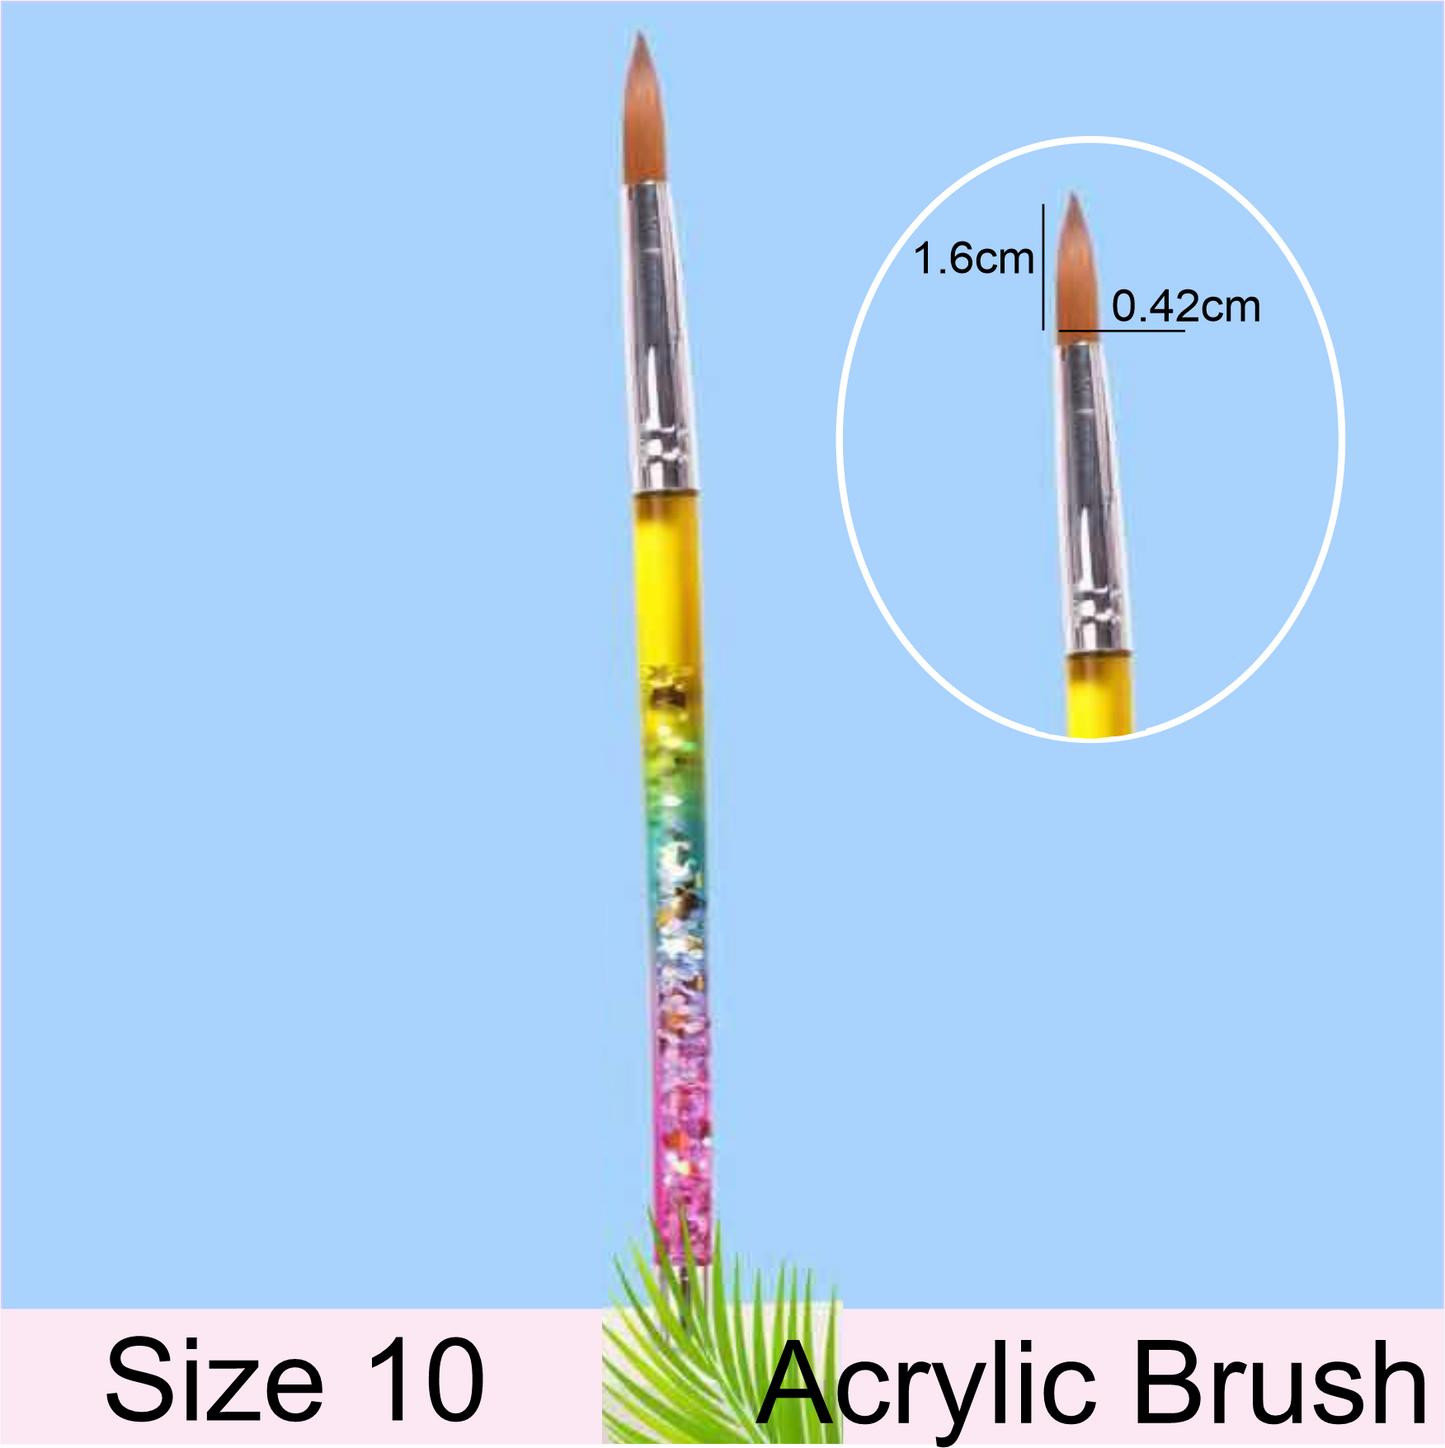 High quality Acrylic Nail Brush Size 10